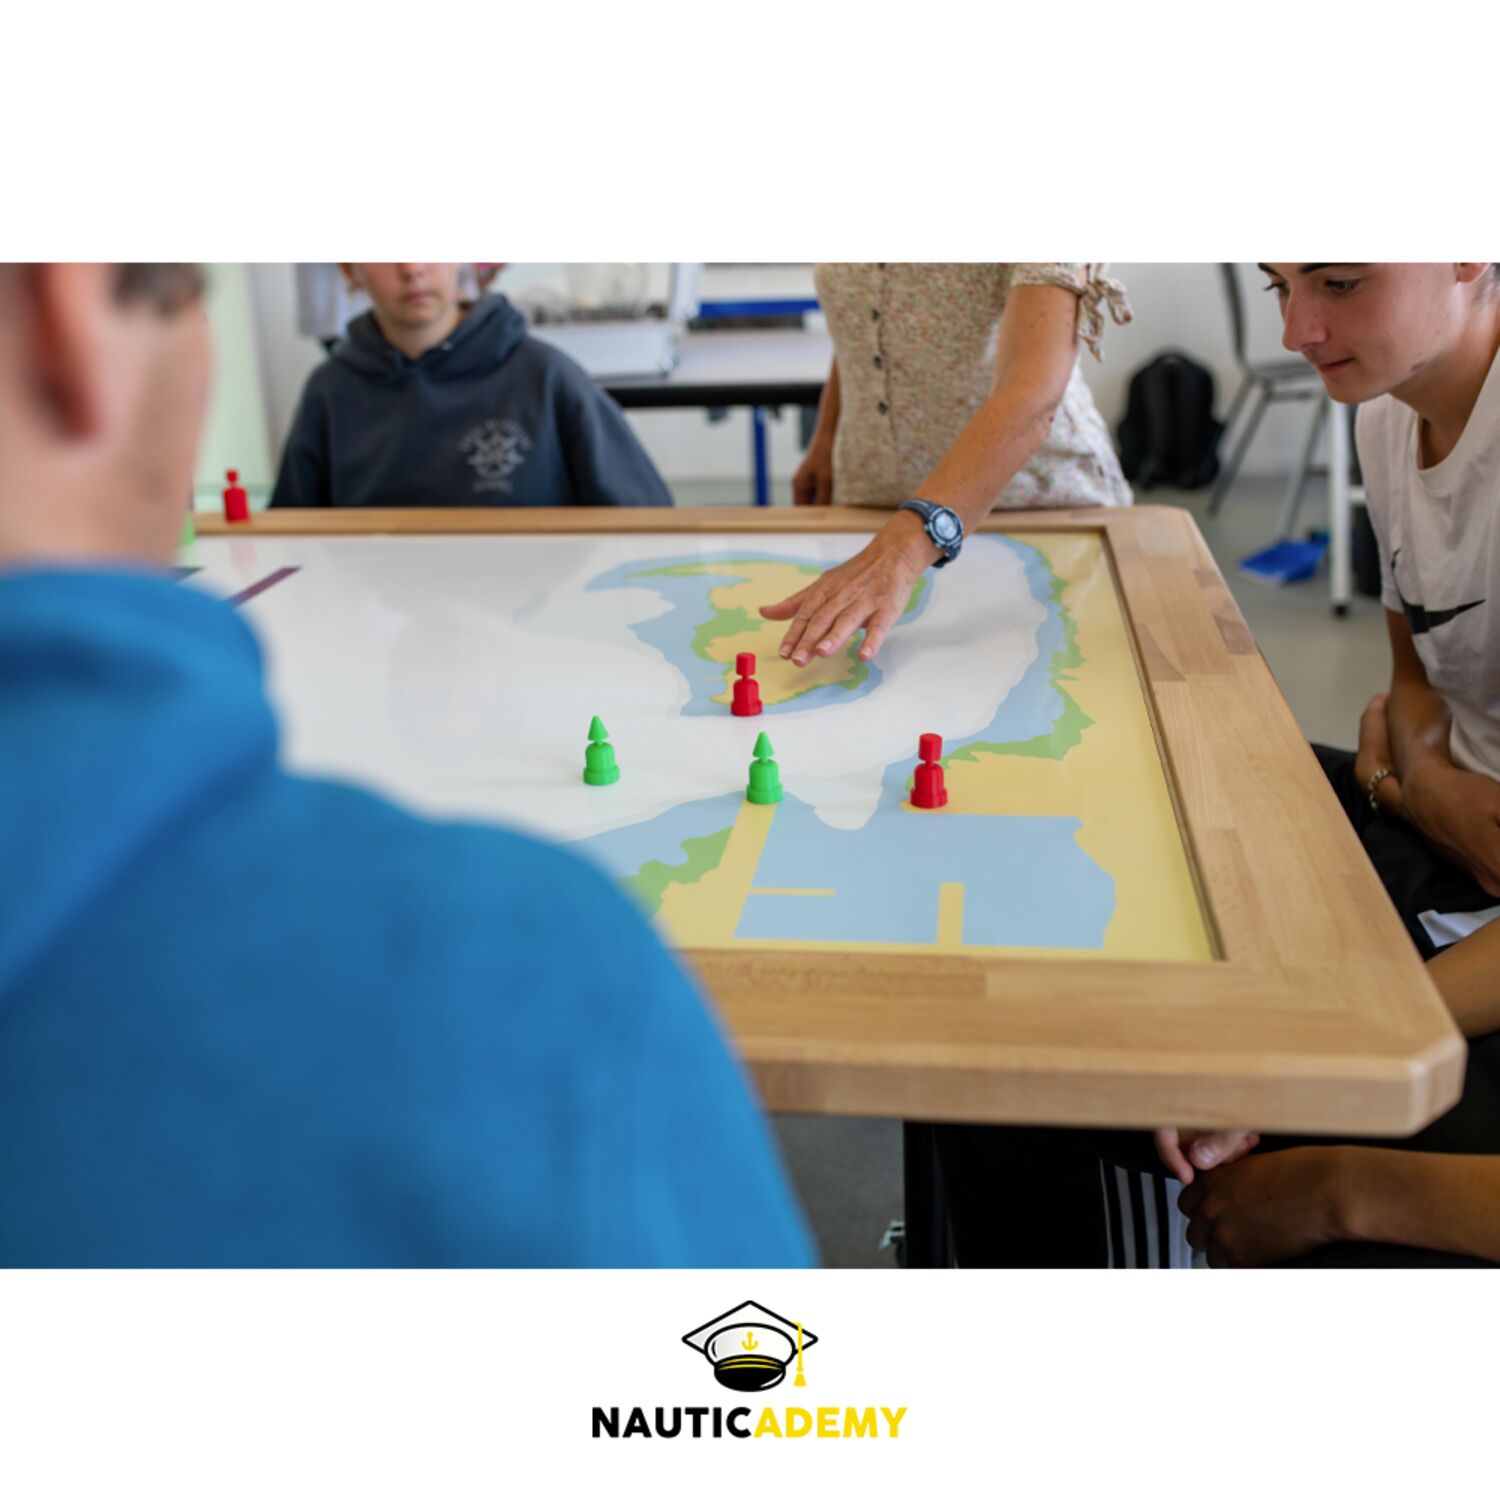 Nauticamedy : un jeu breton pour apprendre la navigation